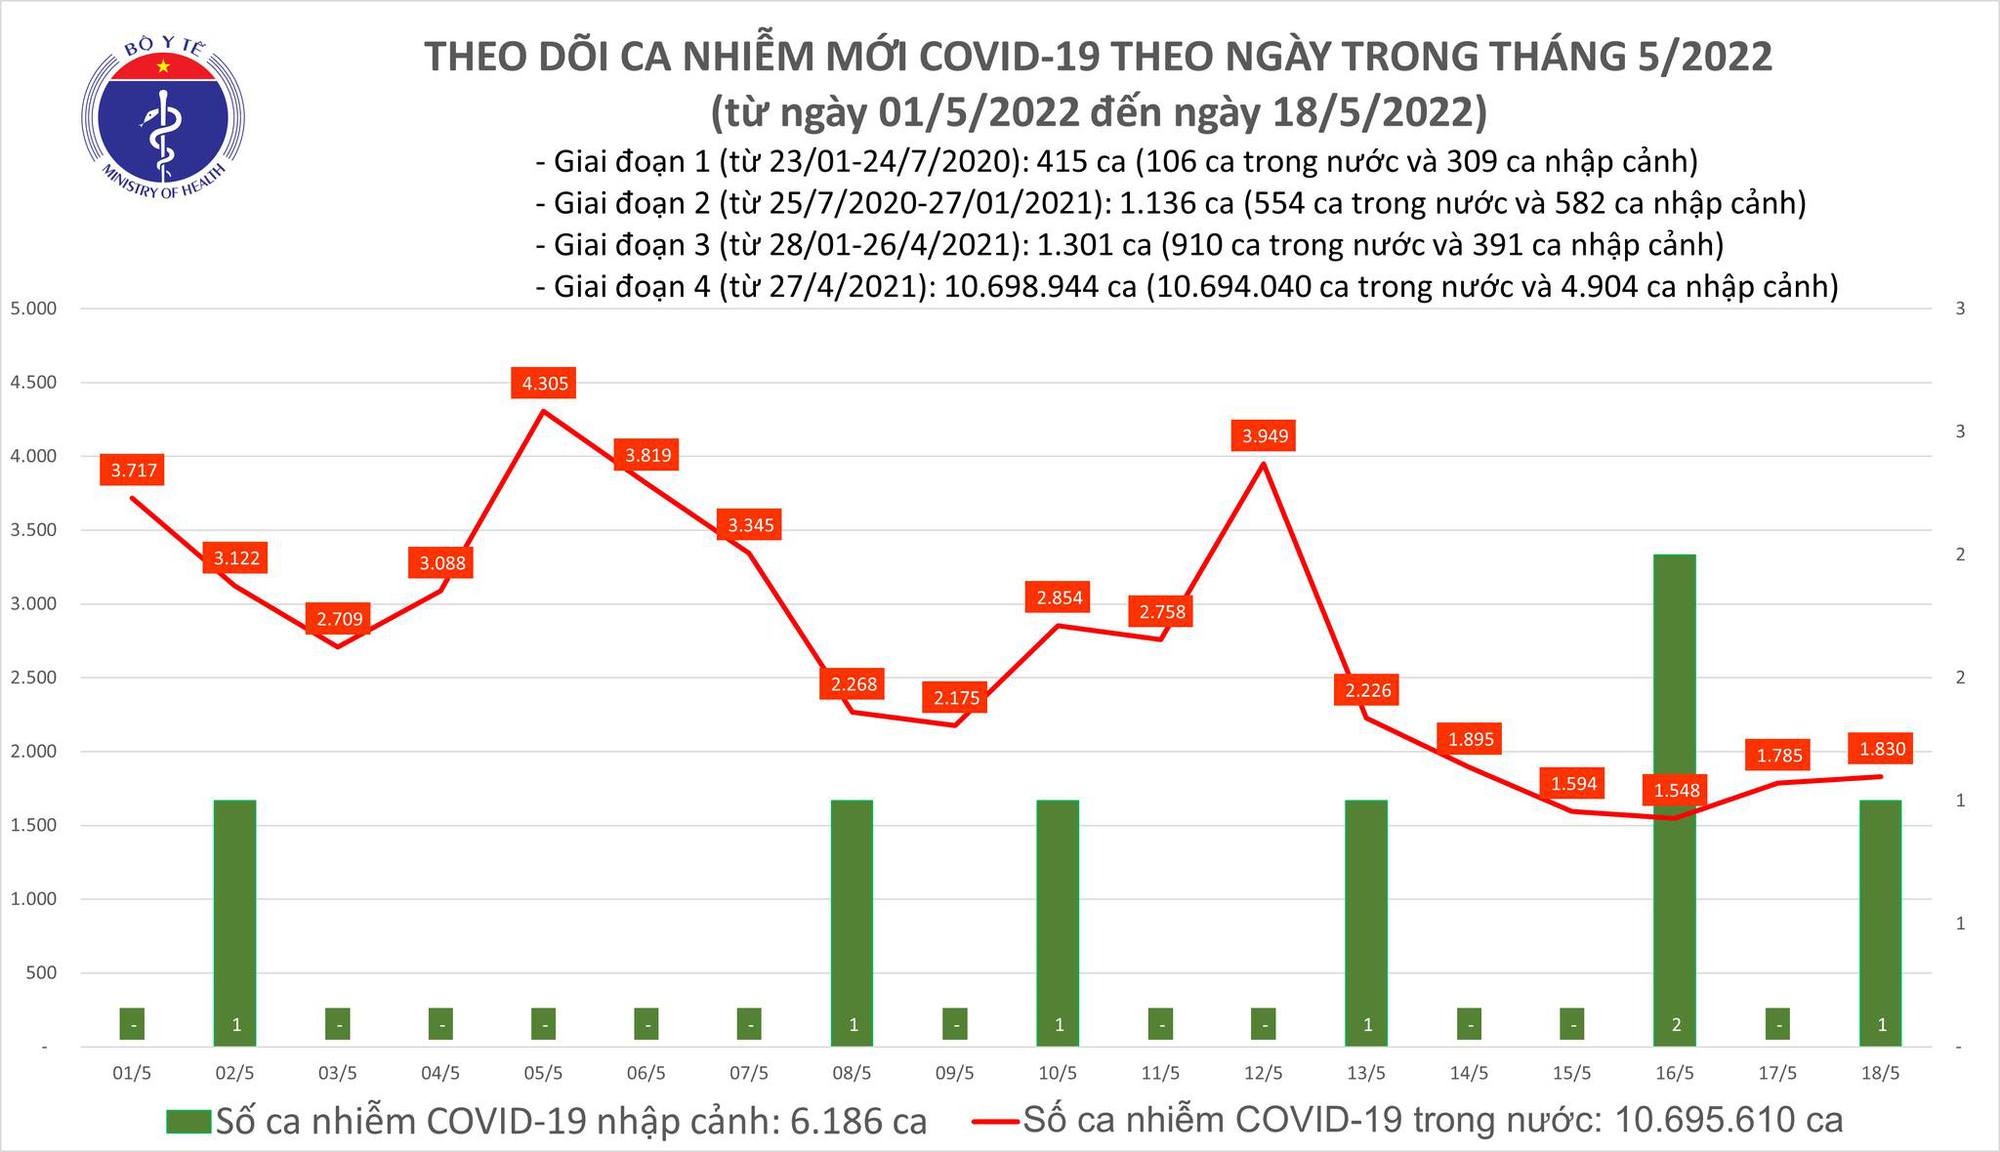 May 19: Add 1,700 new Covid-19 cases, 200 severe Covid-19 cases - Photo 1.